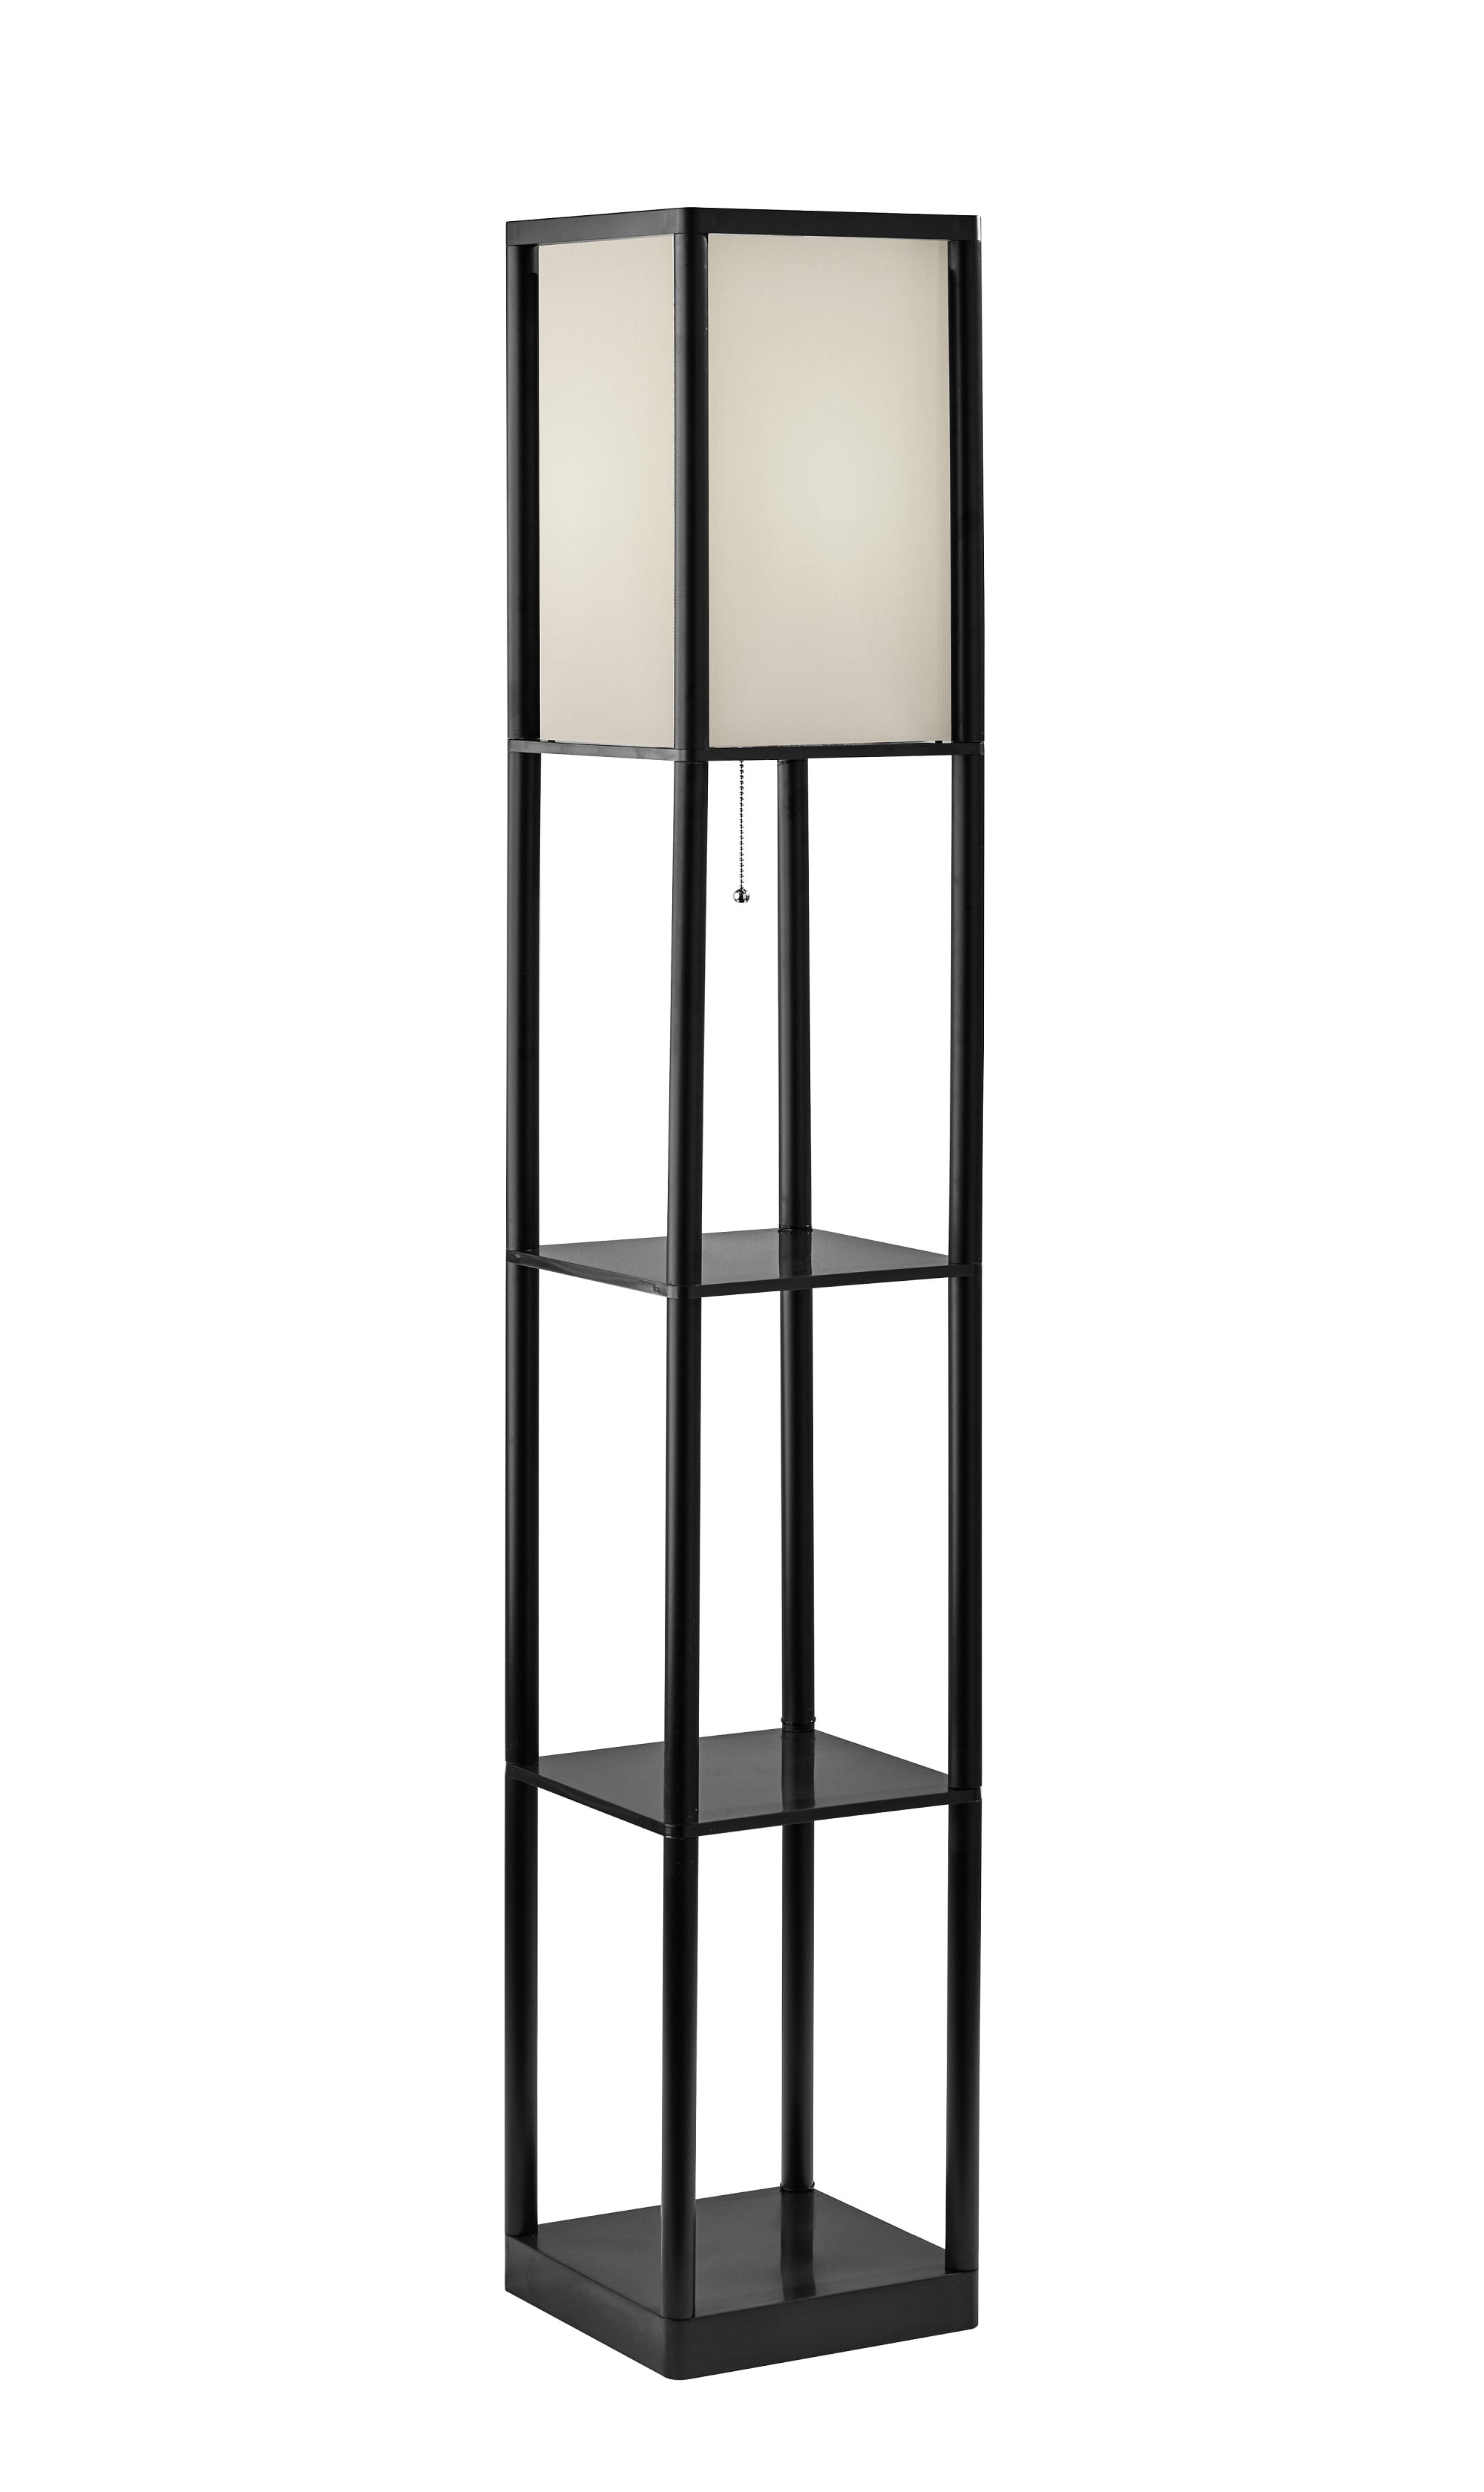 Mainstays 62 Inch Tall Shelf Floor Lamp, Black with White Fabric Shade